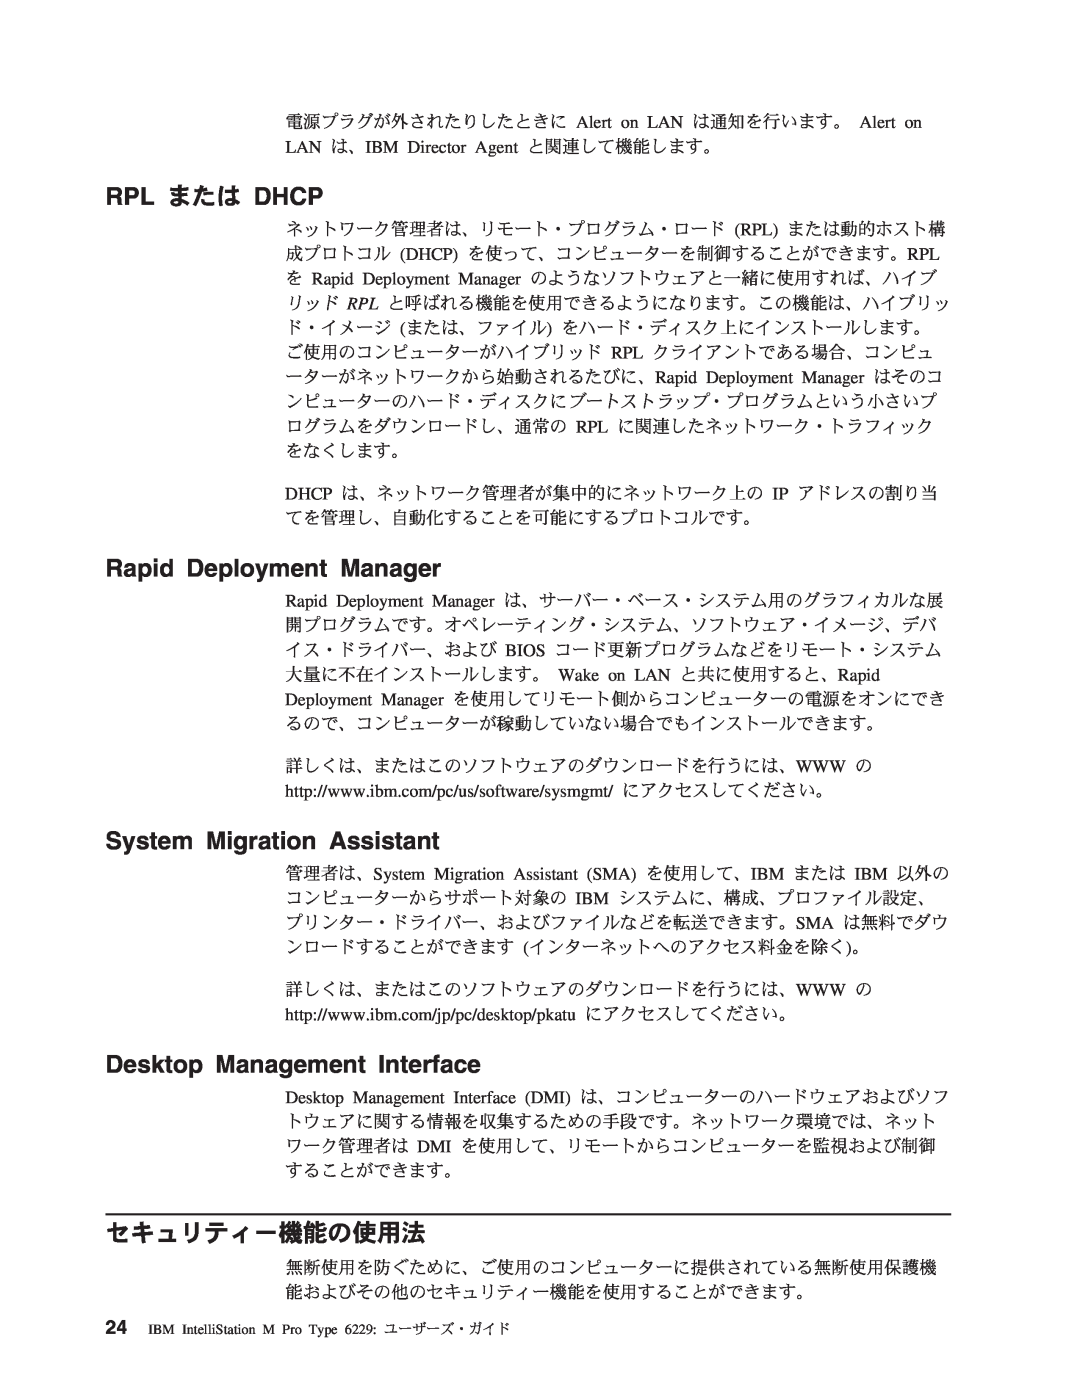 IBM 6229 manual Rpl Dhcp, Rapid Deployment Manager, System Migration Assistant, Desktop Management Interface 